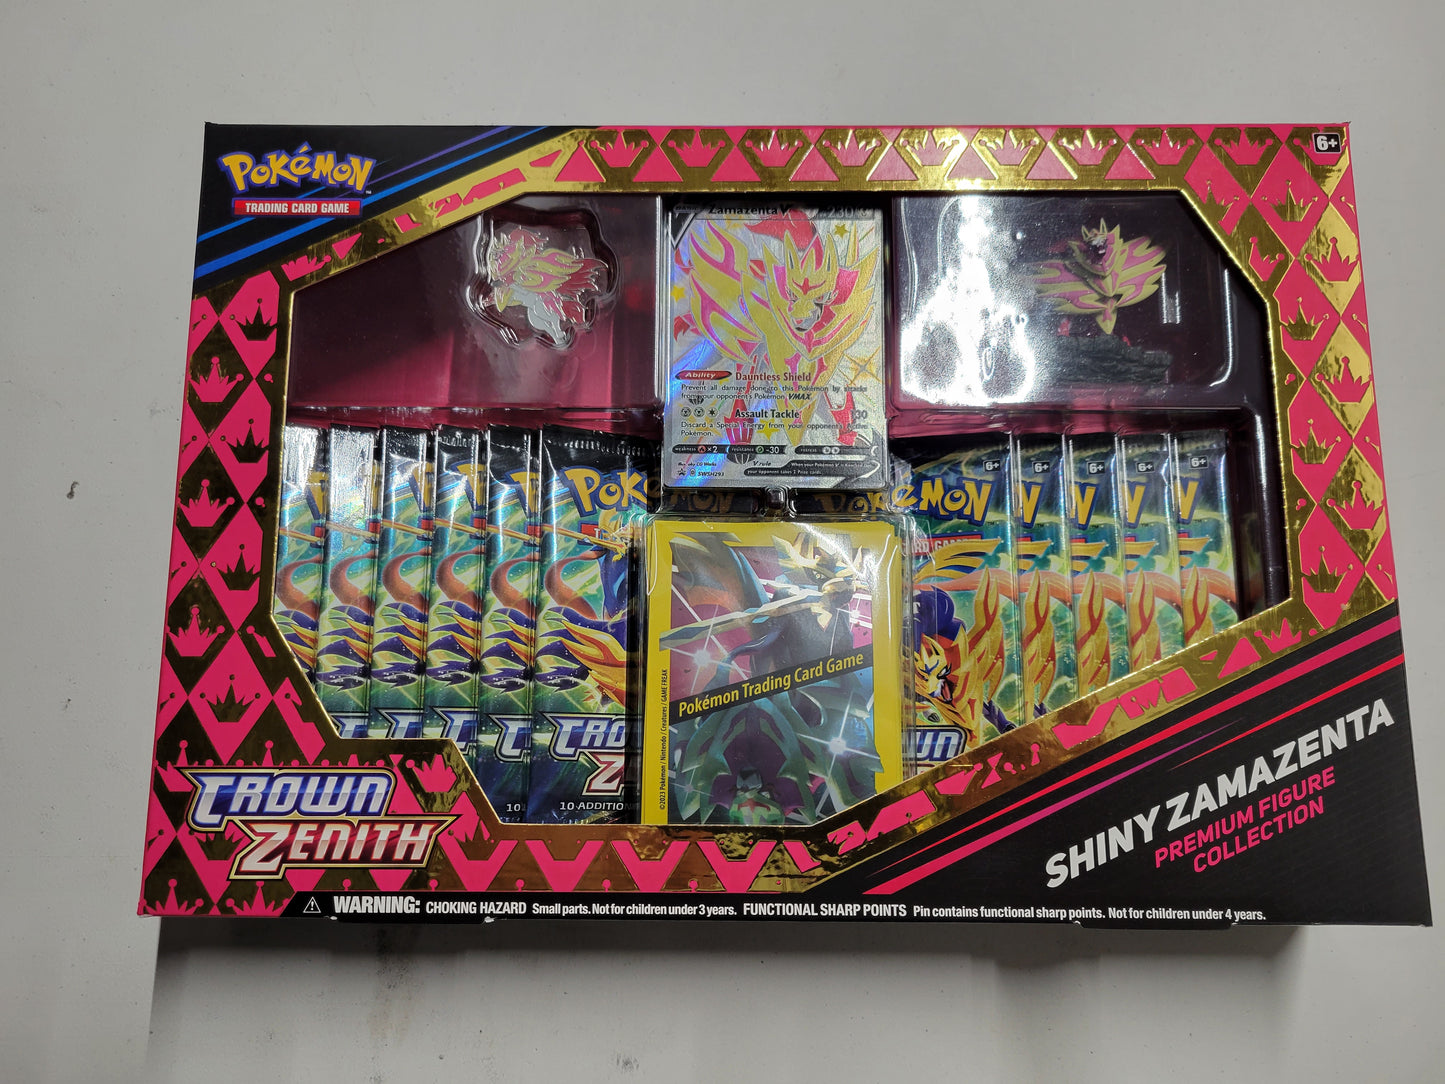 Shiny Zamazenta Premium Figure Collection